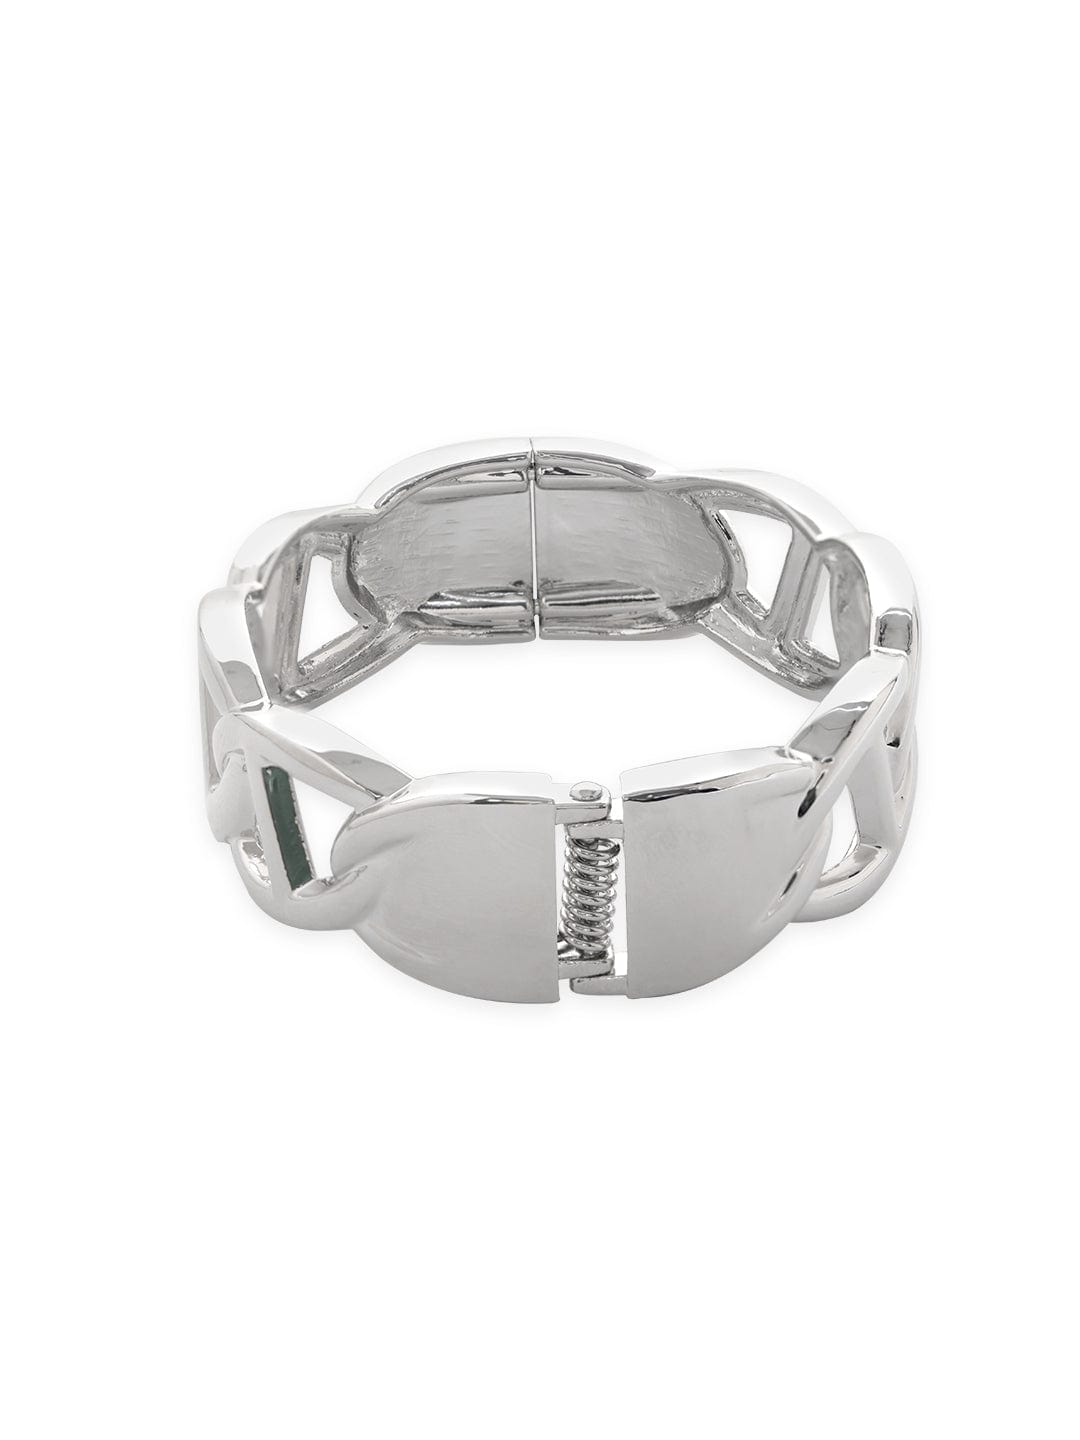 Rubans Voguish Silver Gleam: Set of 2 Silver-Colored Bracelets Bangles &amp; Bracelets